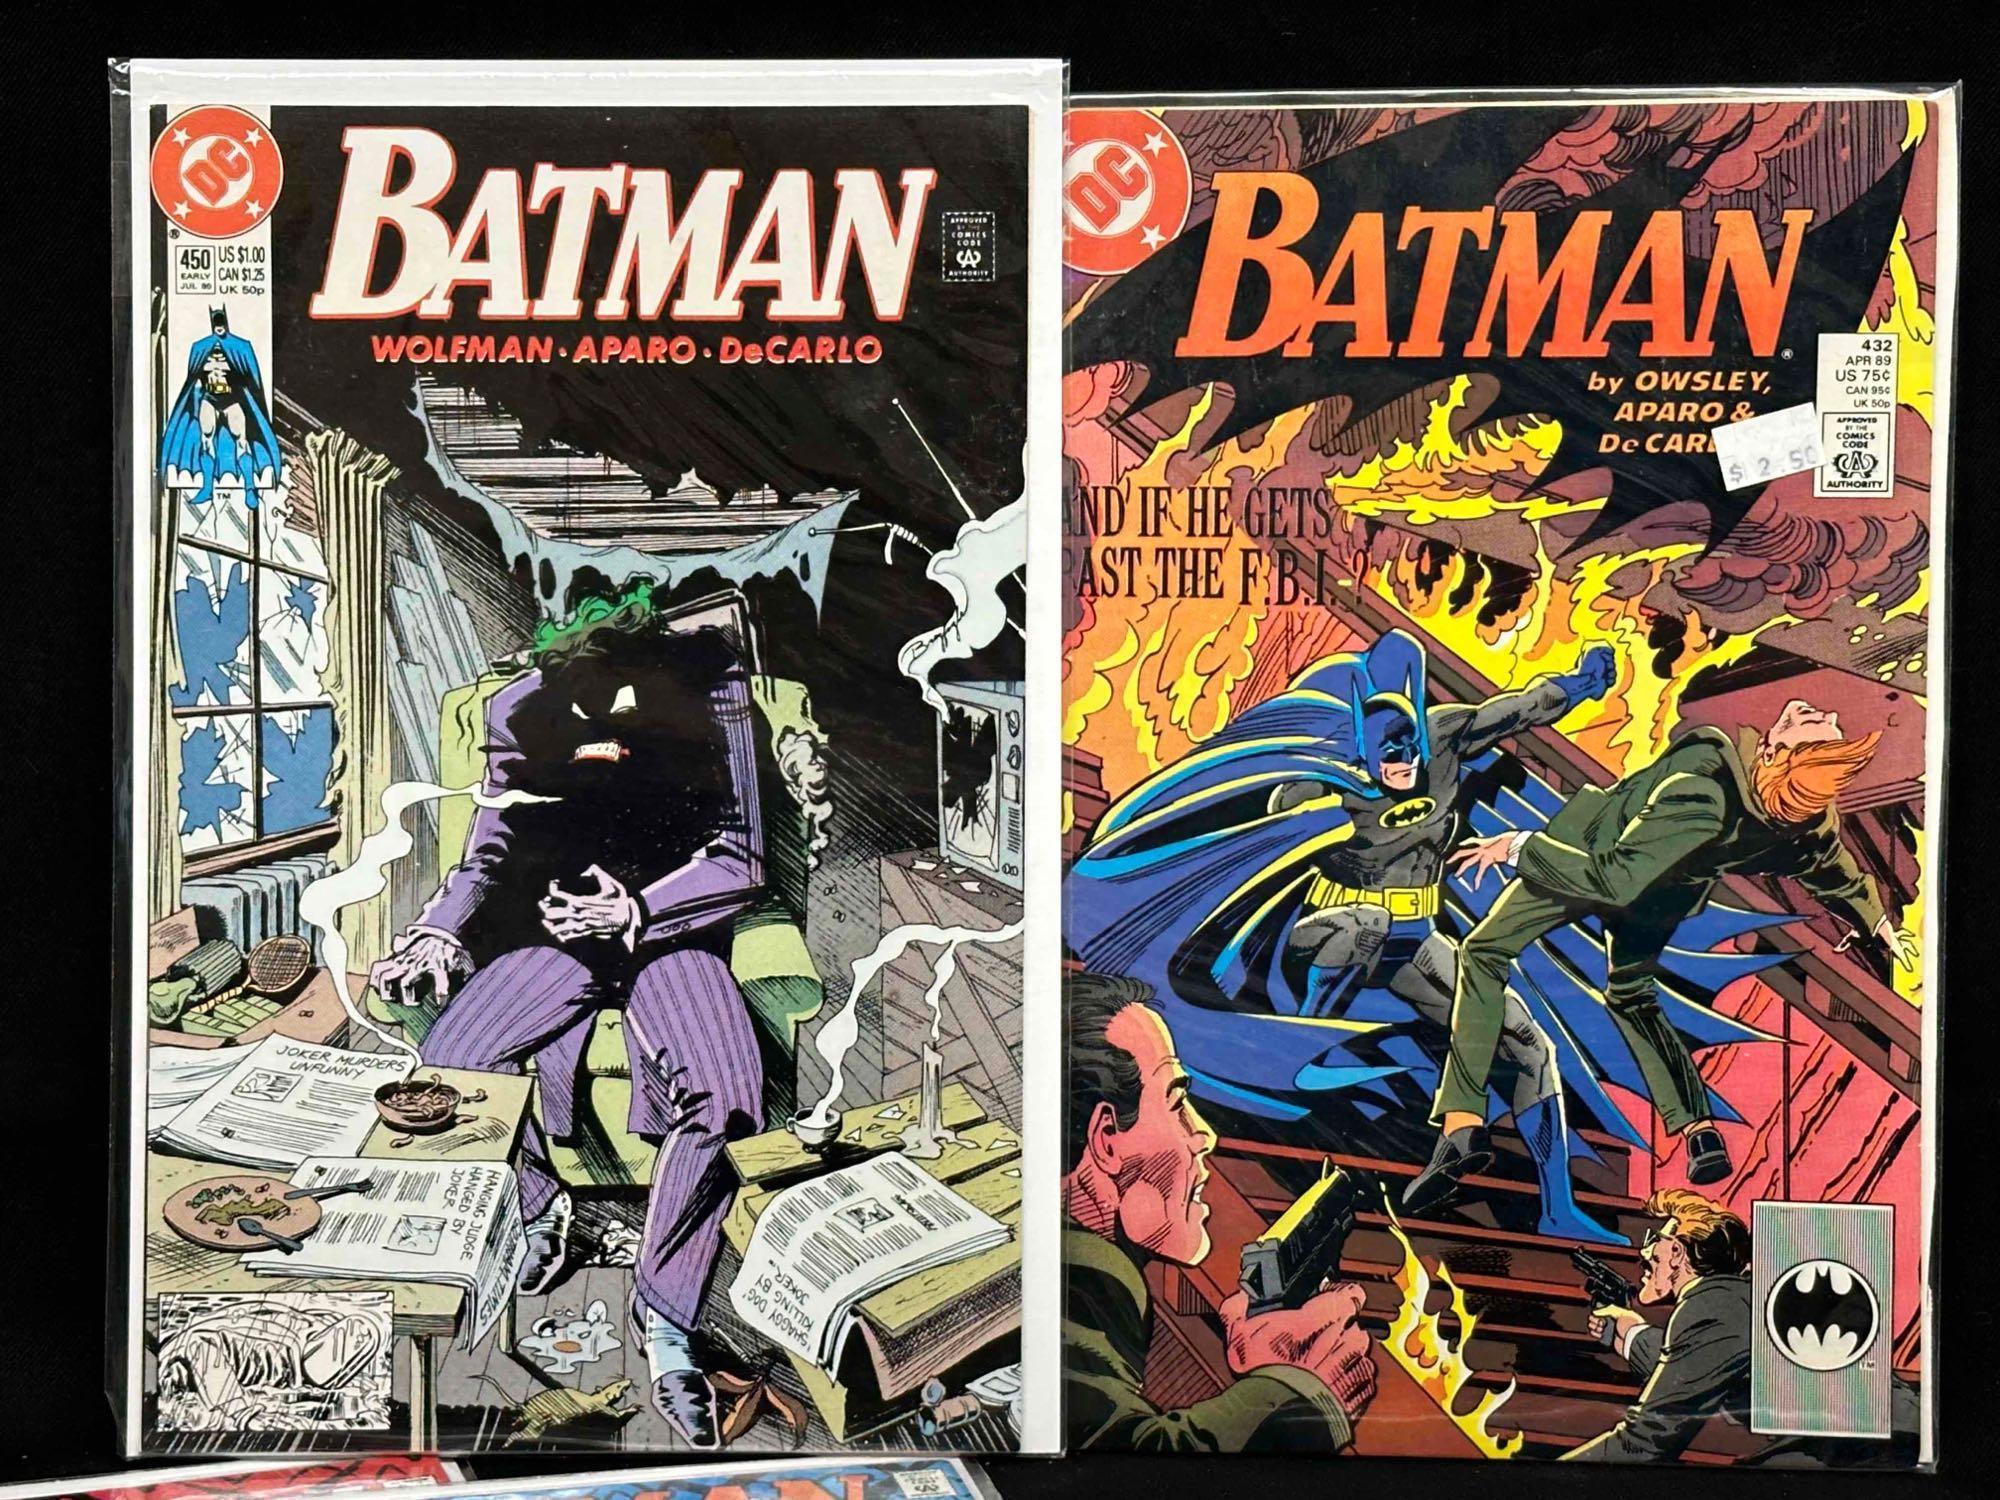 Approximately 35 Batman and DC Comics Marvel 2015 Calendar